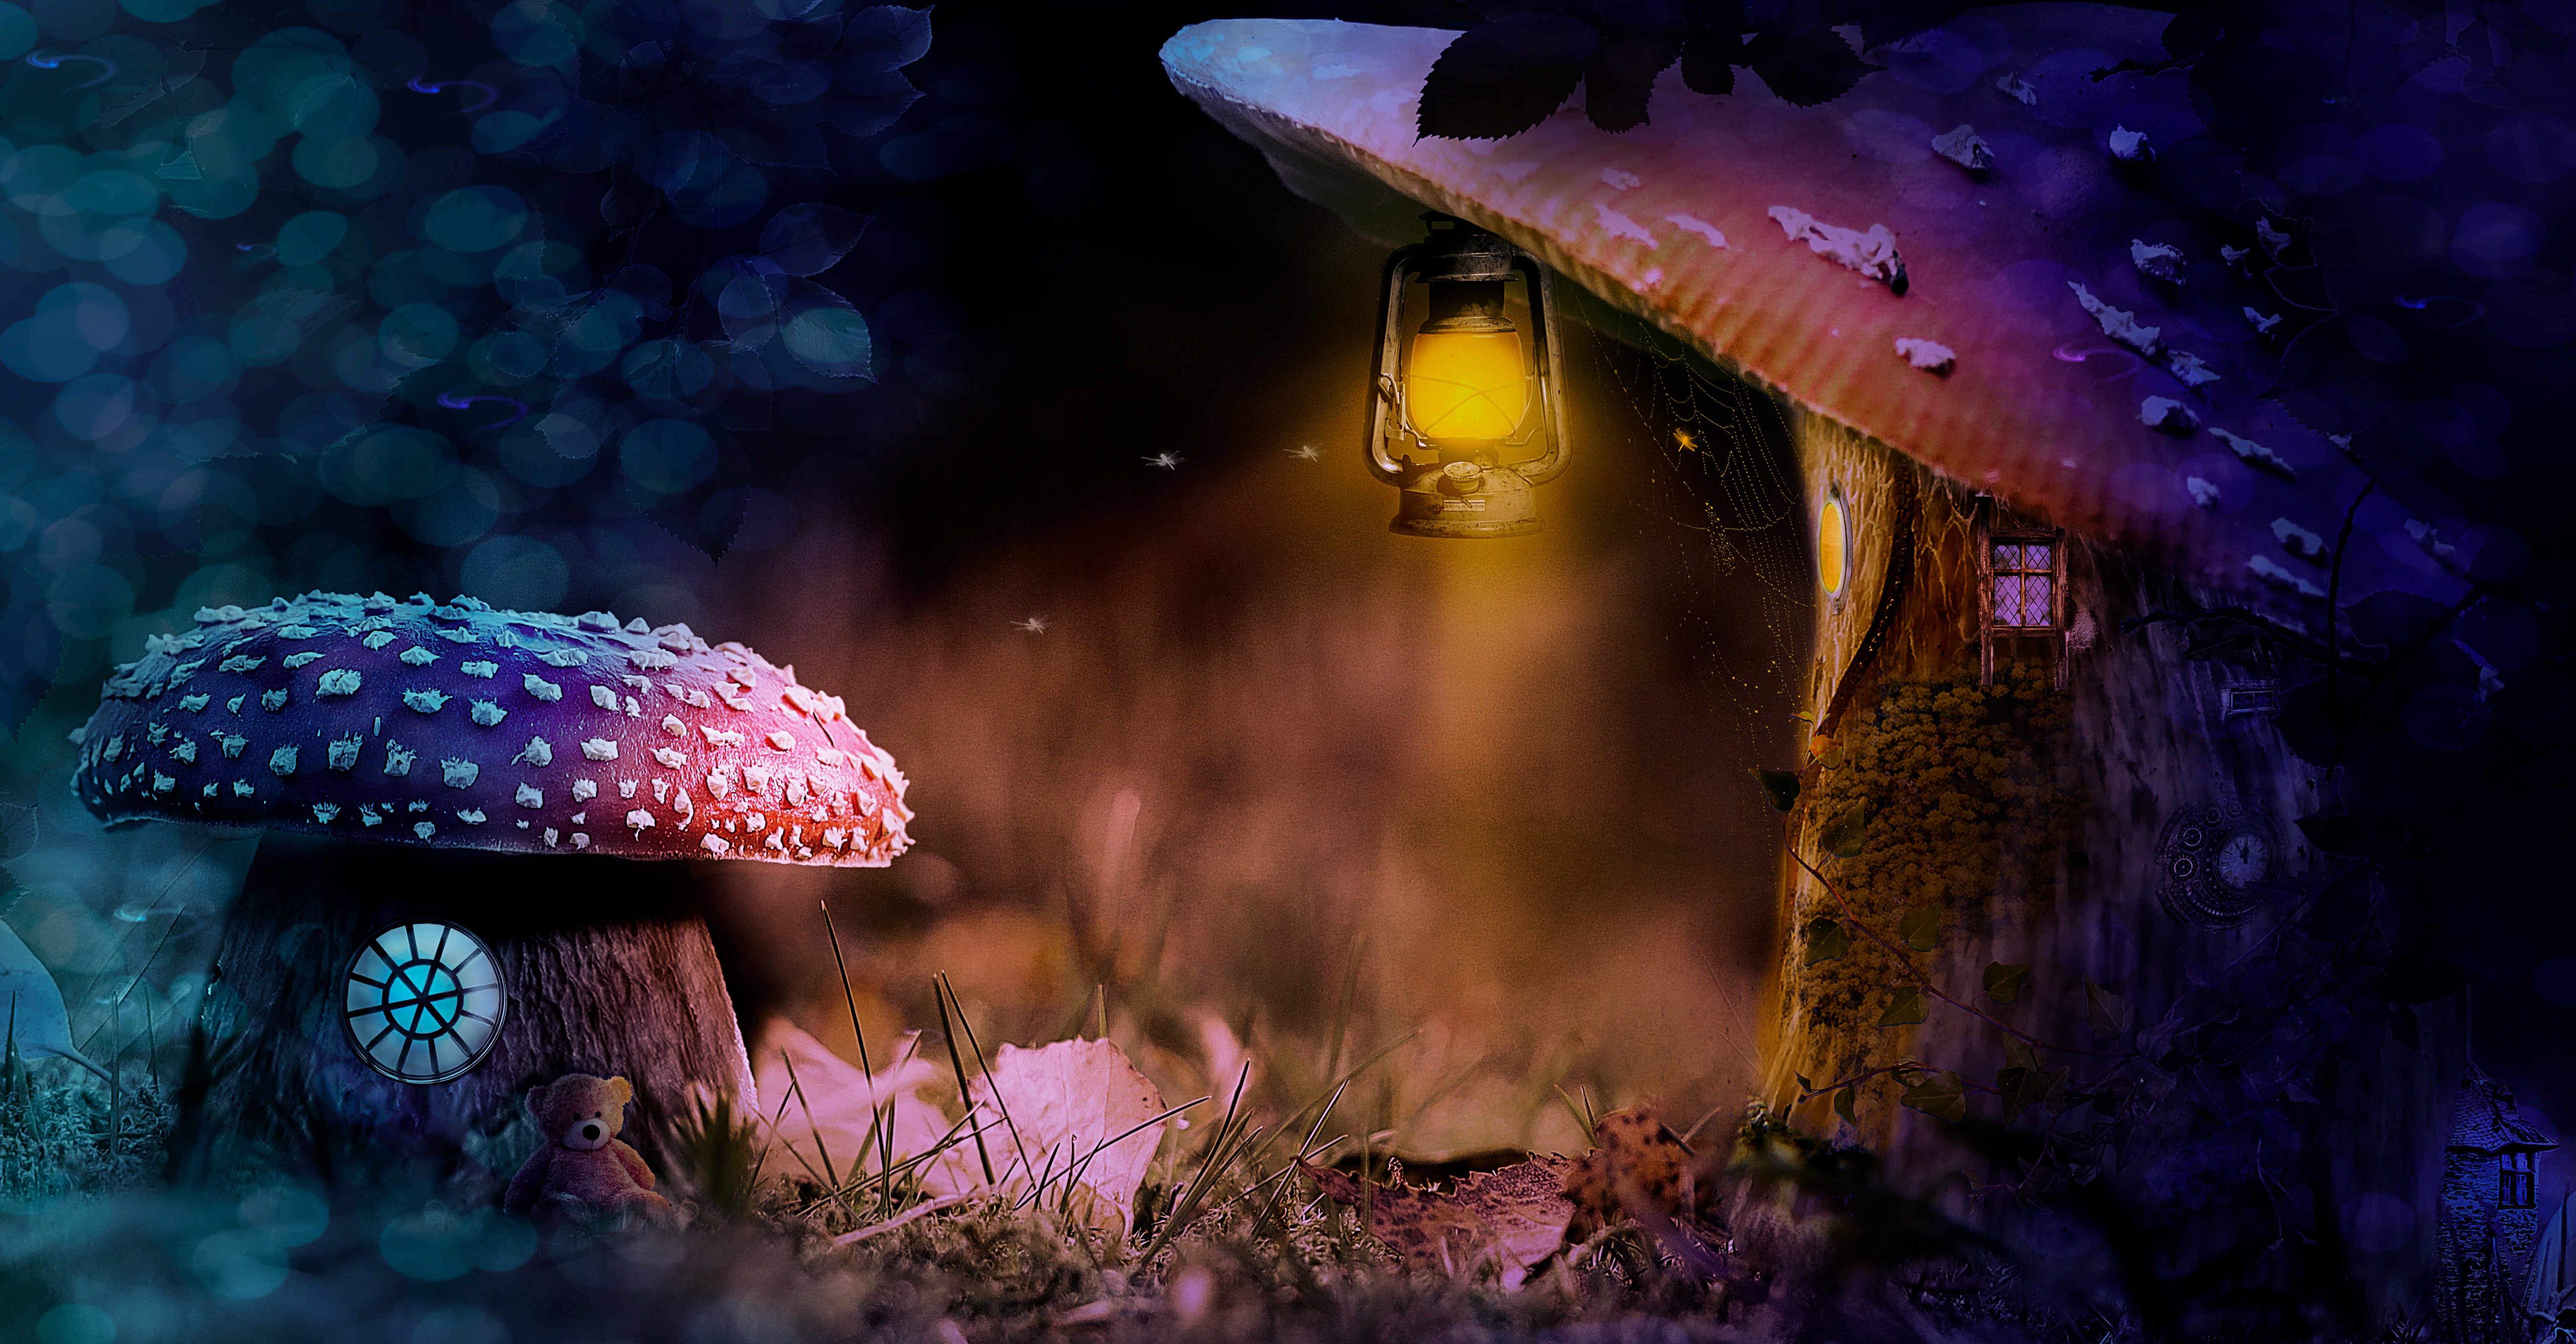 Wallpaper fluorescence glowing mushroom dark art desktop wallpaper hd  image picture background d90792  wallpapersmug